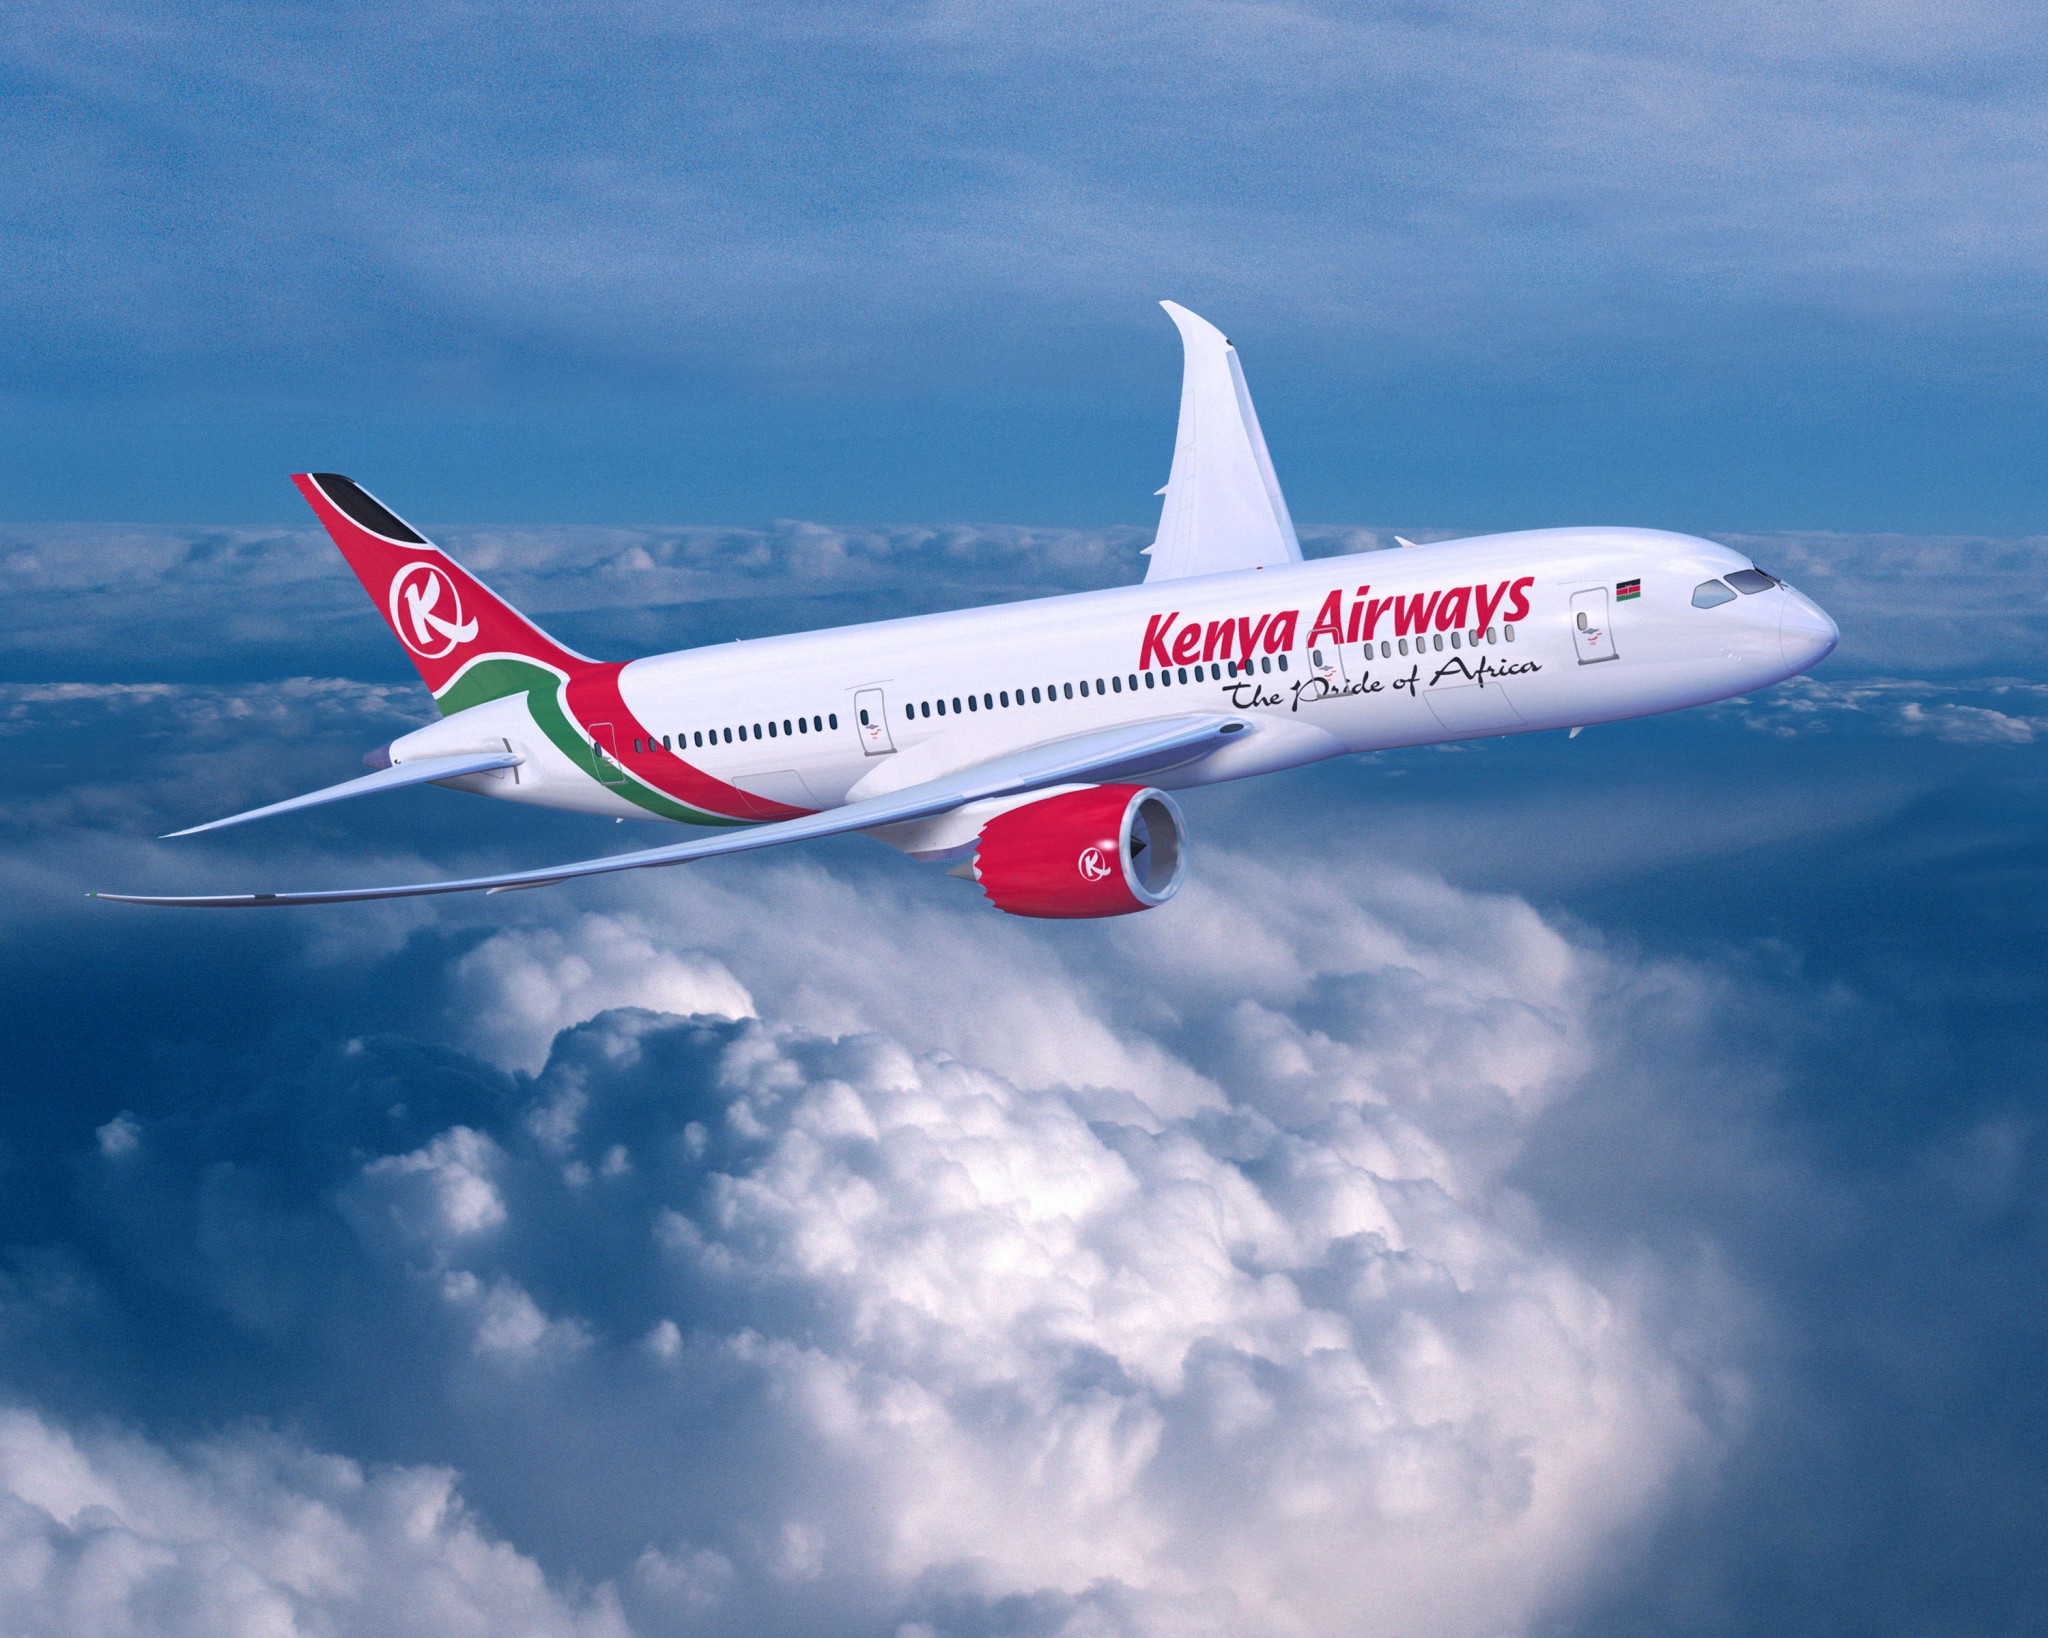 Kenya Airways to operate SAF powered flight to mark Africa Day